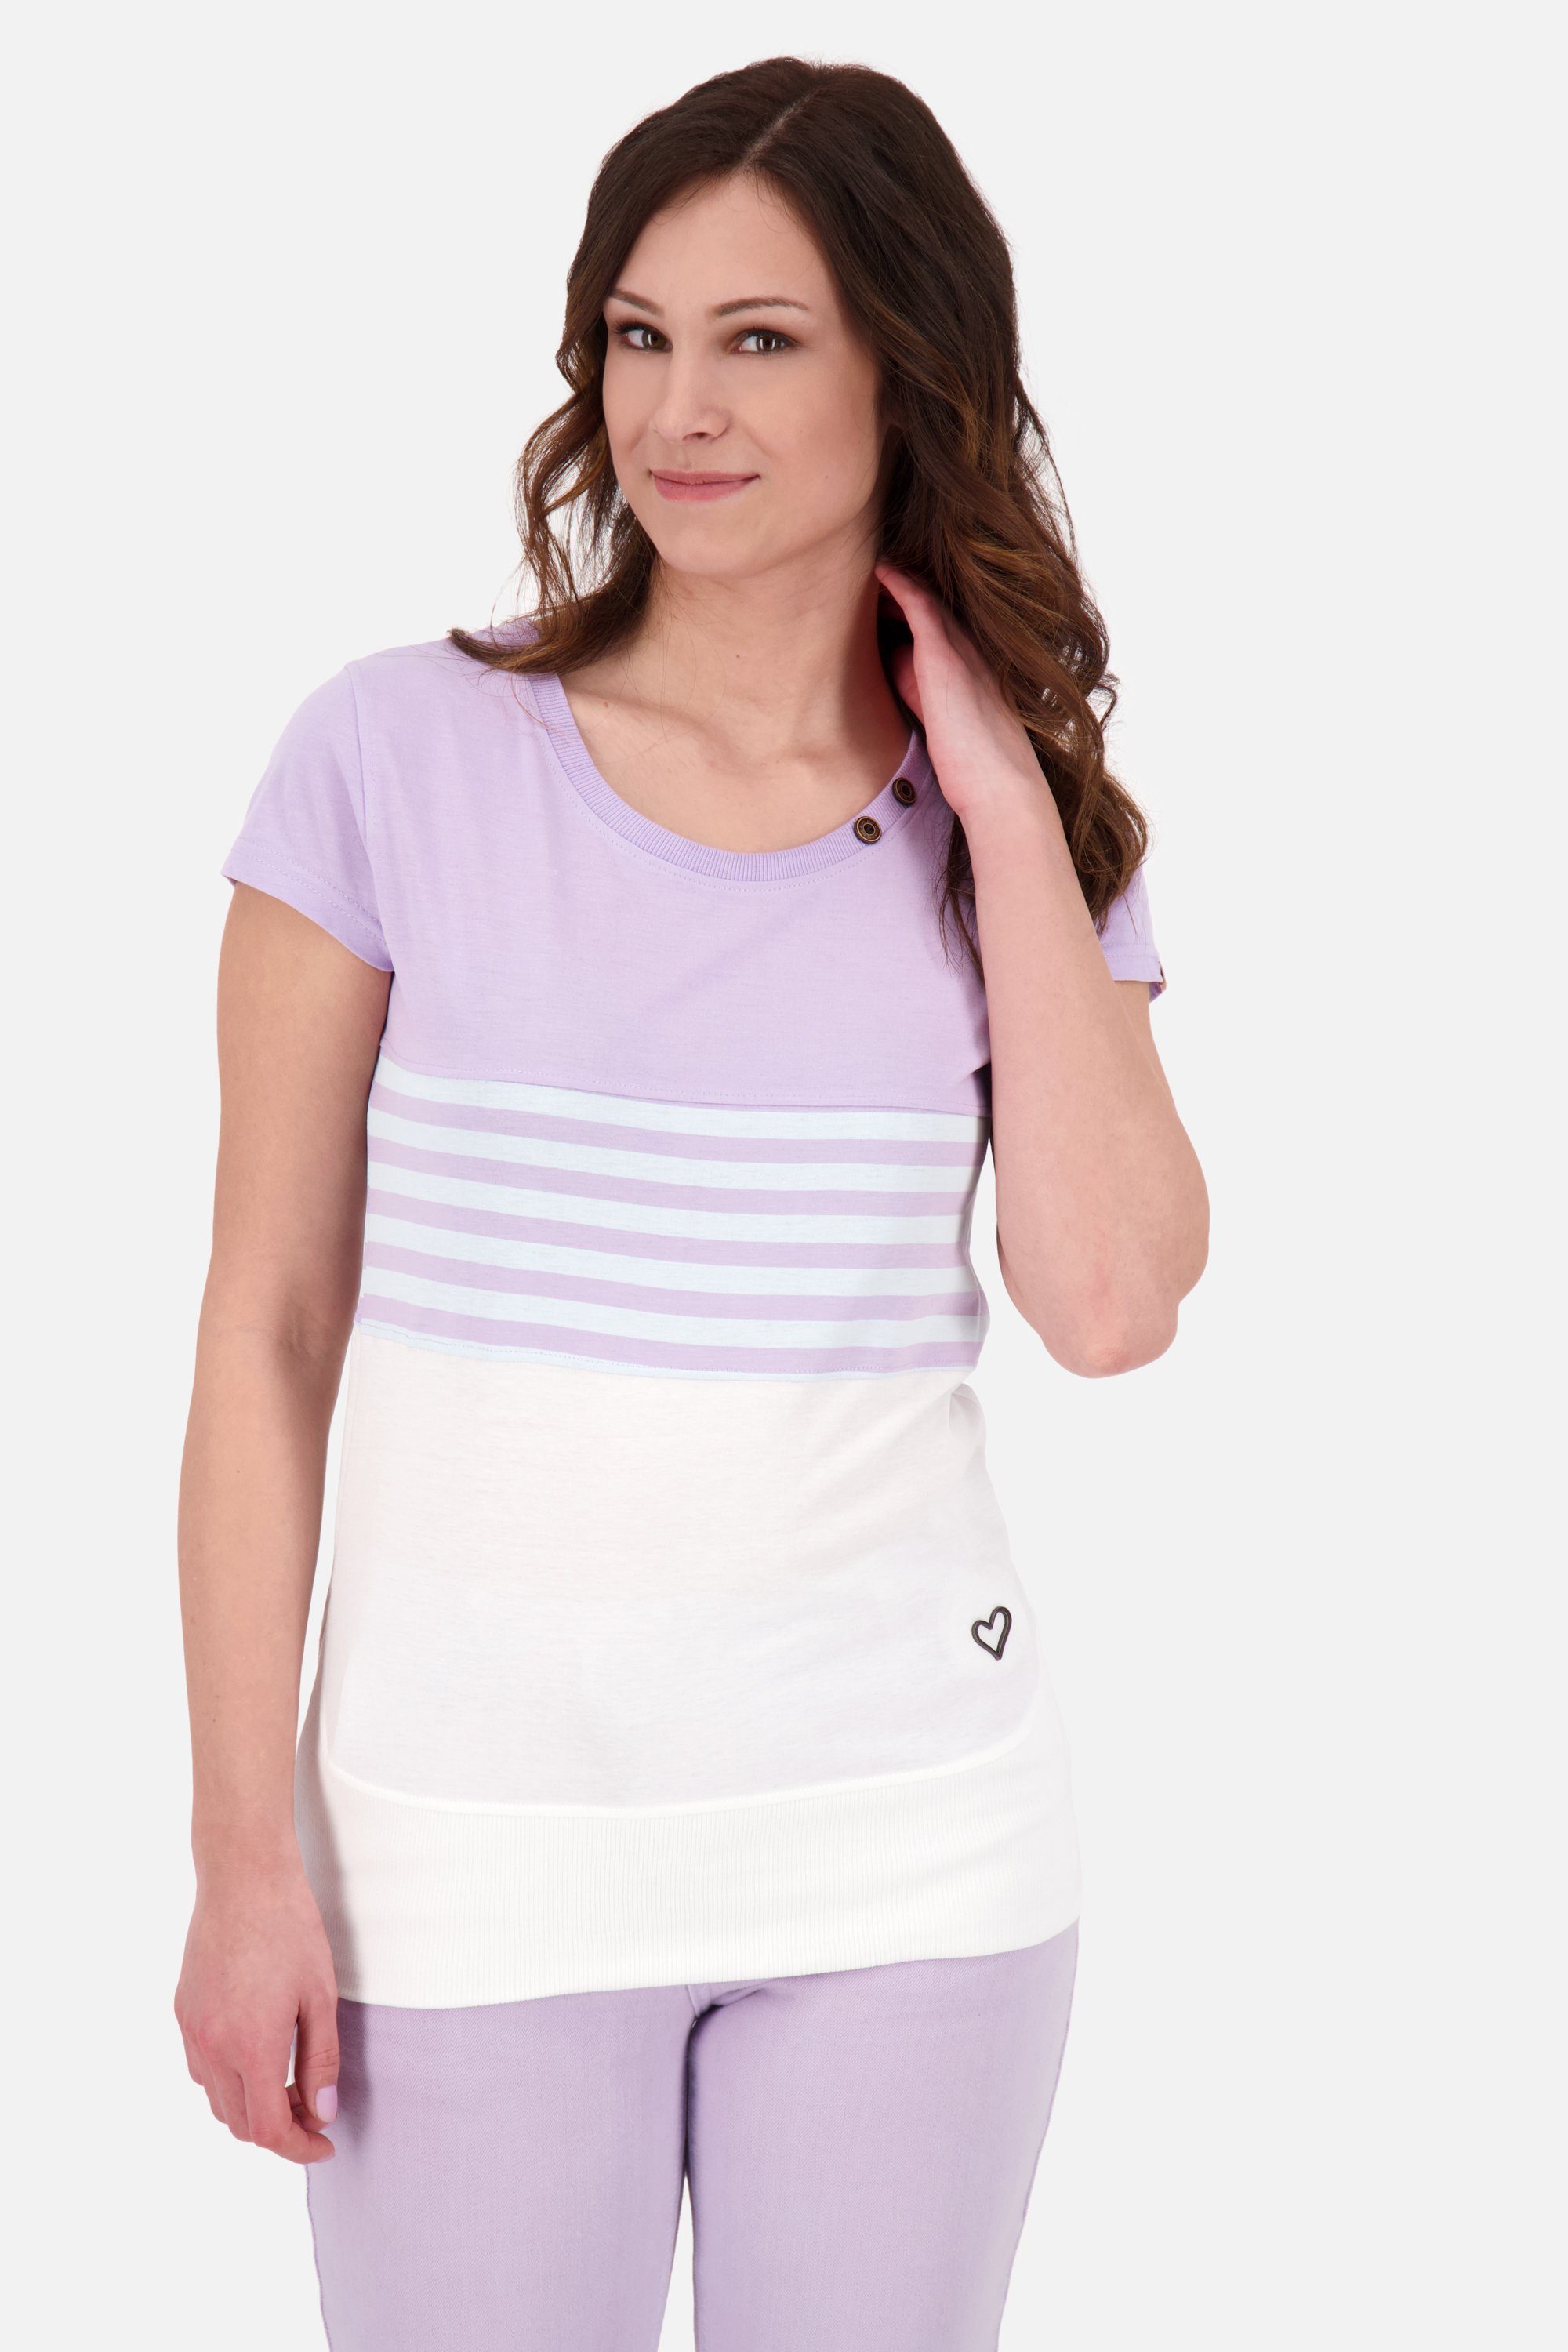 Sonder… Shirt lavender Kurzarmshirt, Rundhalsshirt digital Kickin Shirt Z Alife CoriAK & Damen